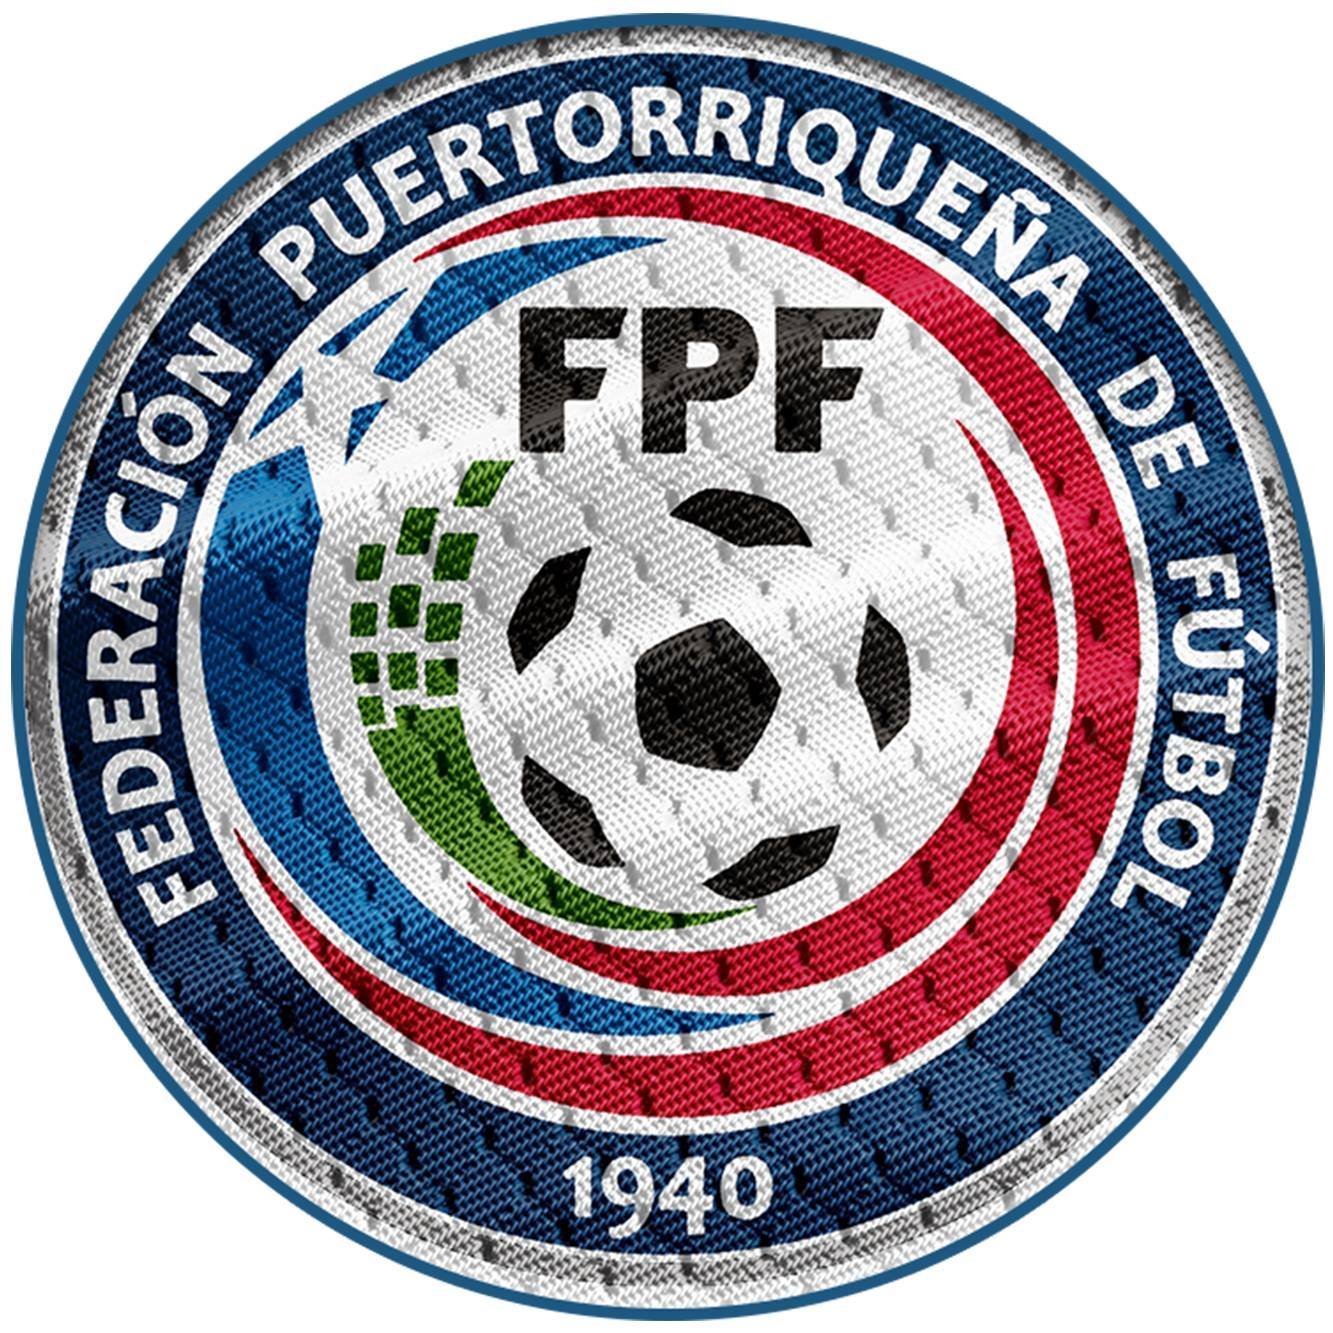 Image result for PUERTO RICAN FOOTBALL ASSOCIATION